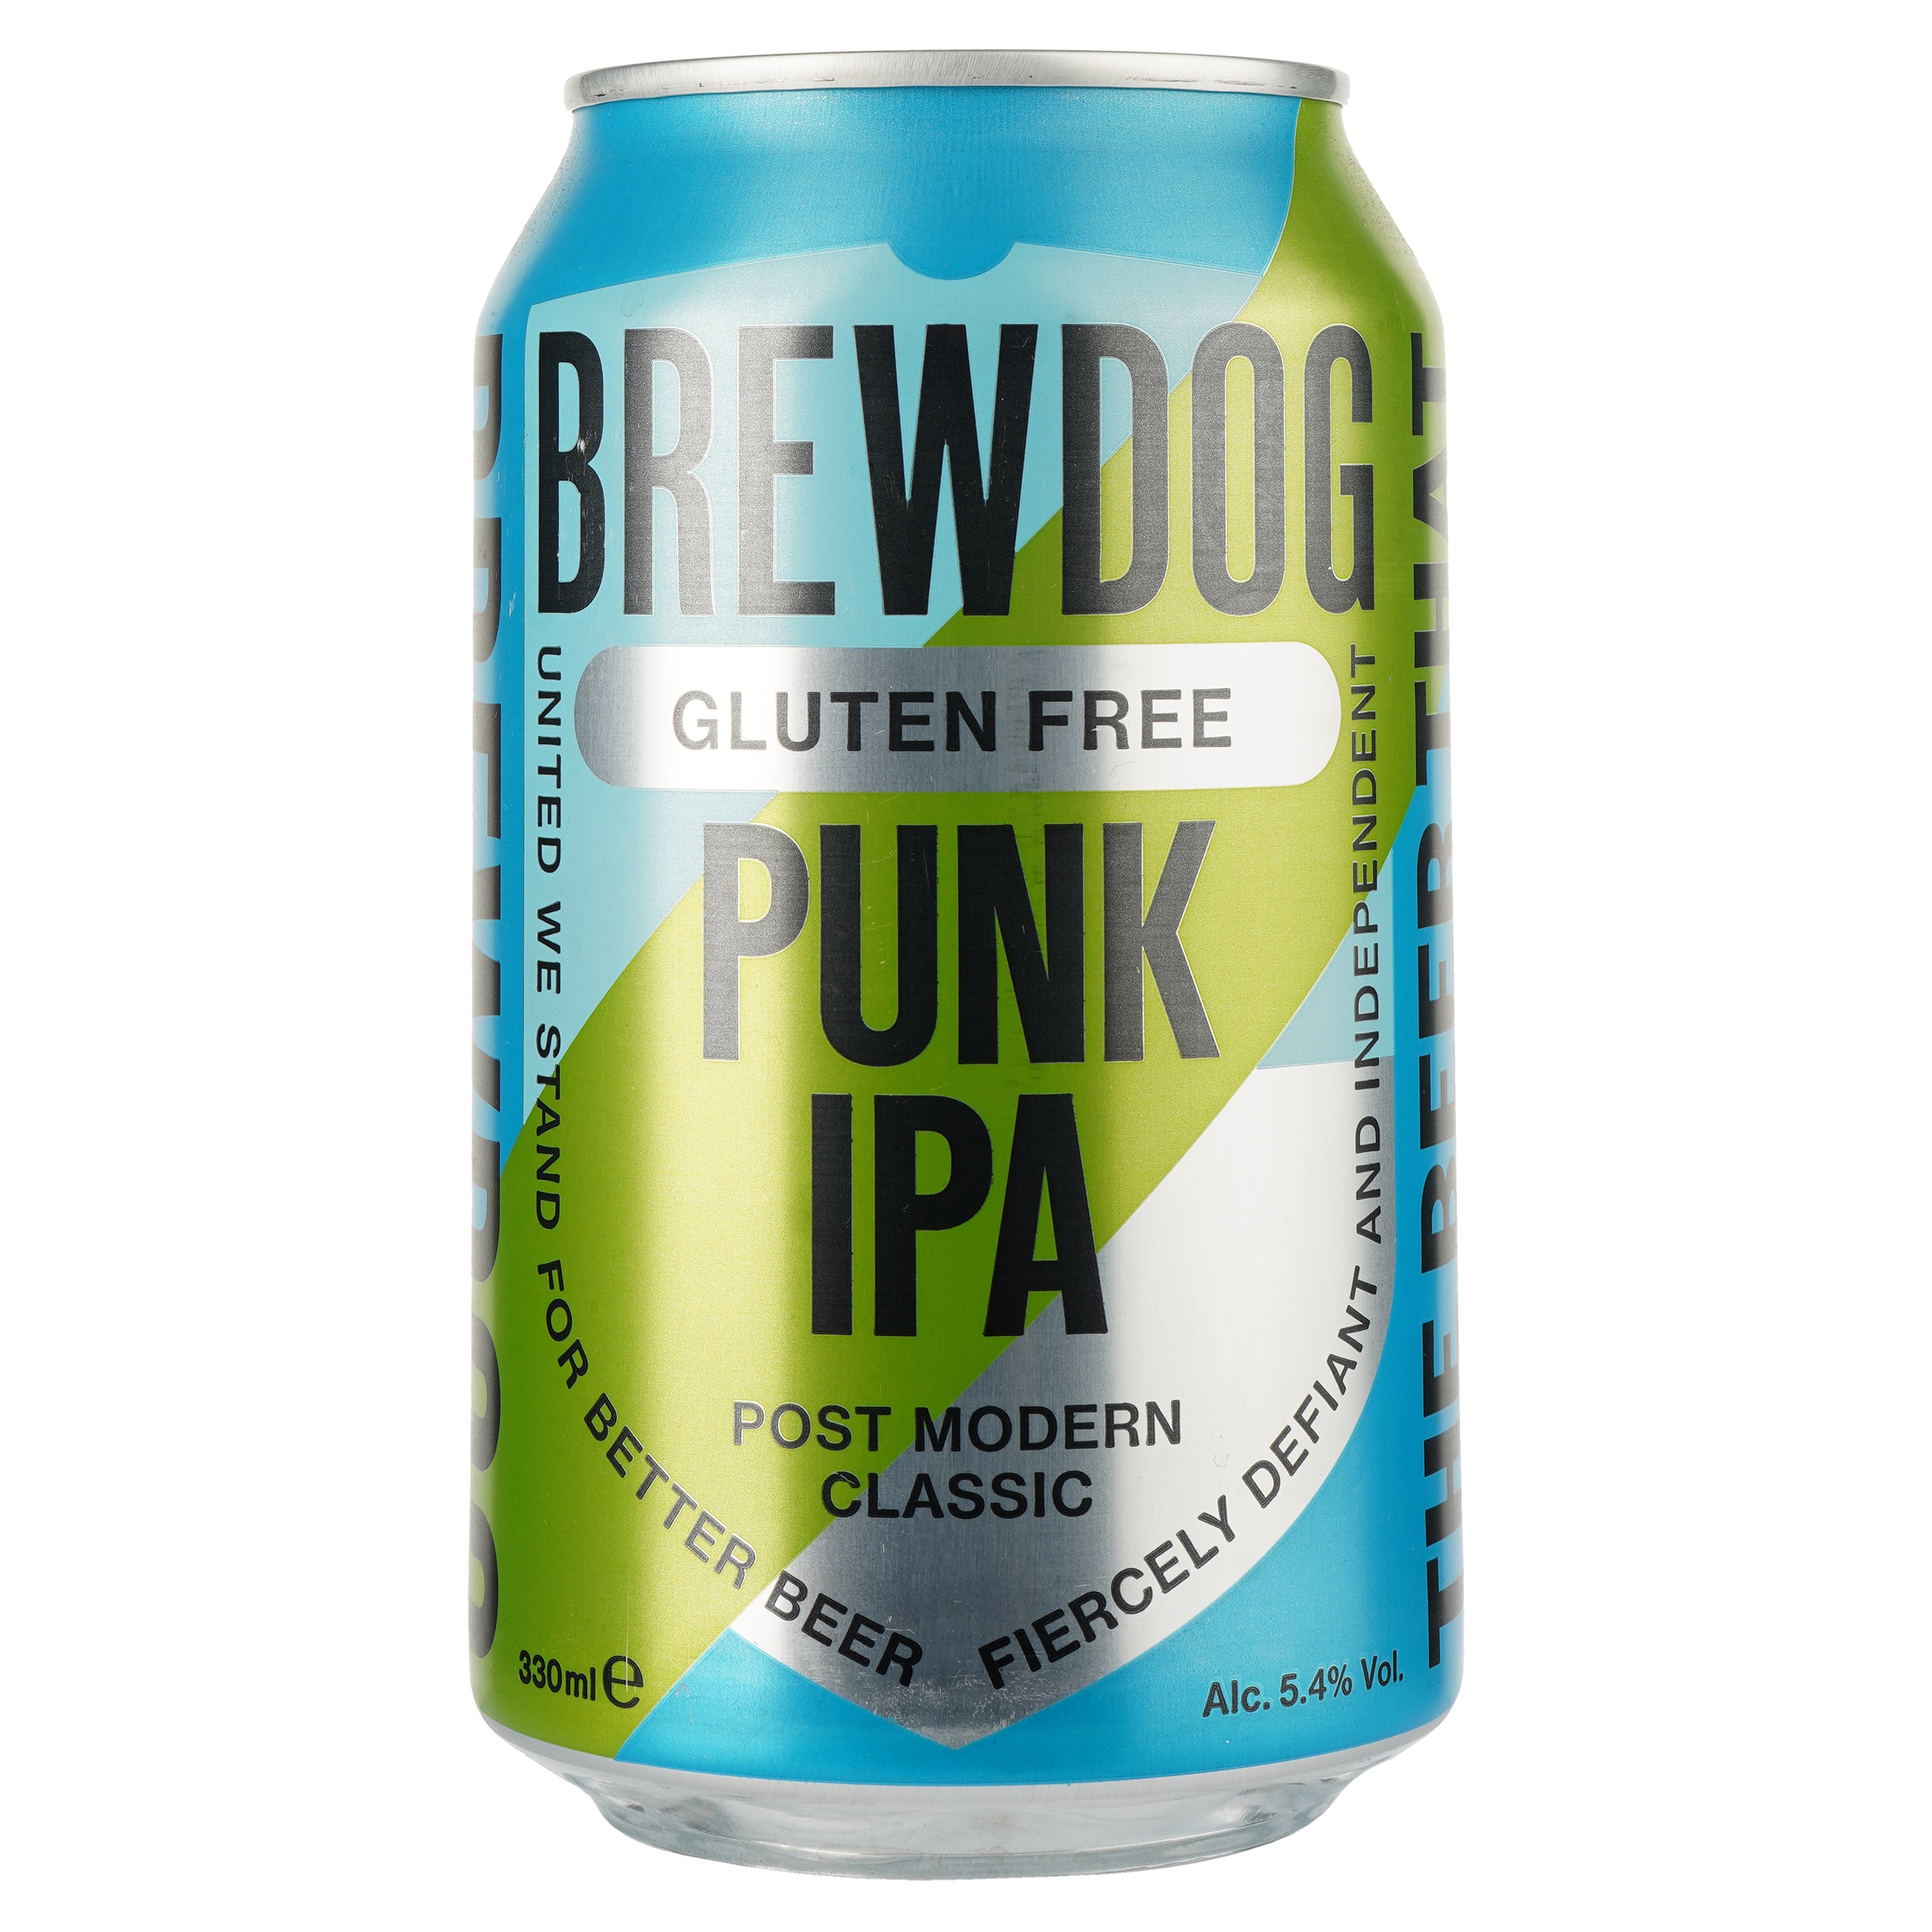 Пиво BrewDog Punk IPA Gluten Free, светлое, 5,4%, ж/б, 0,33 л - фото 1